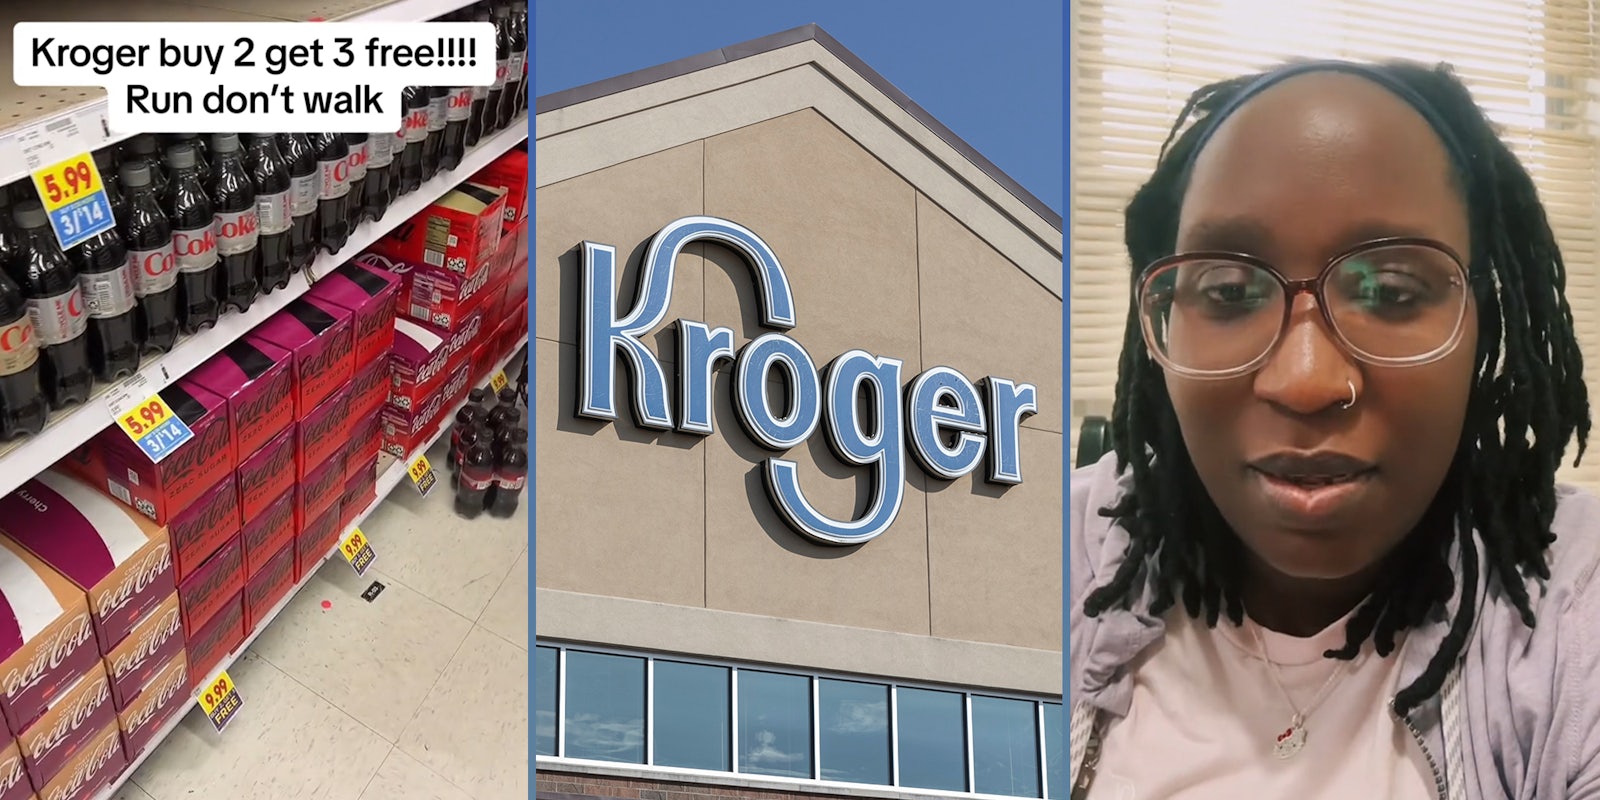 Kroger shopper lauds buy 2, get 3 free deals